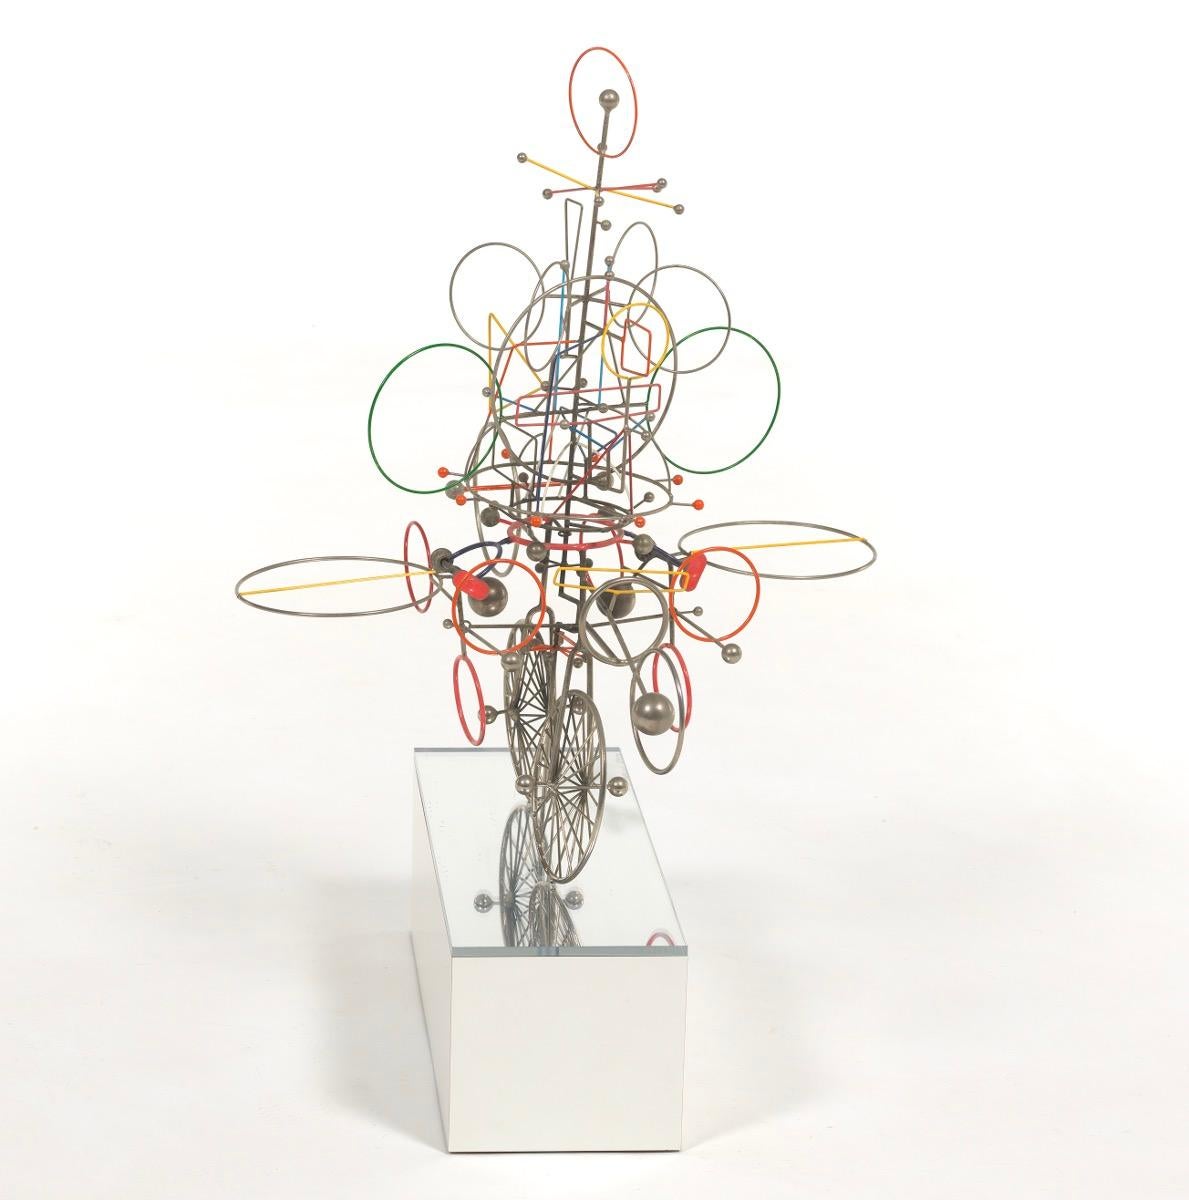 Joseph Burlini (American, b. 1937) Contemporary Kinetic Metal Sculpture, 1972 4